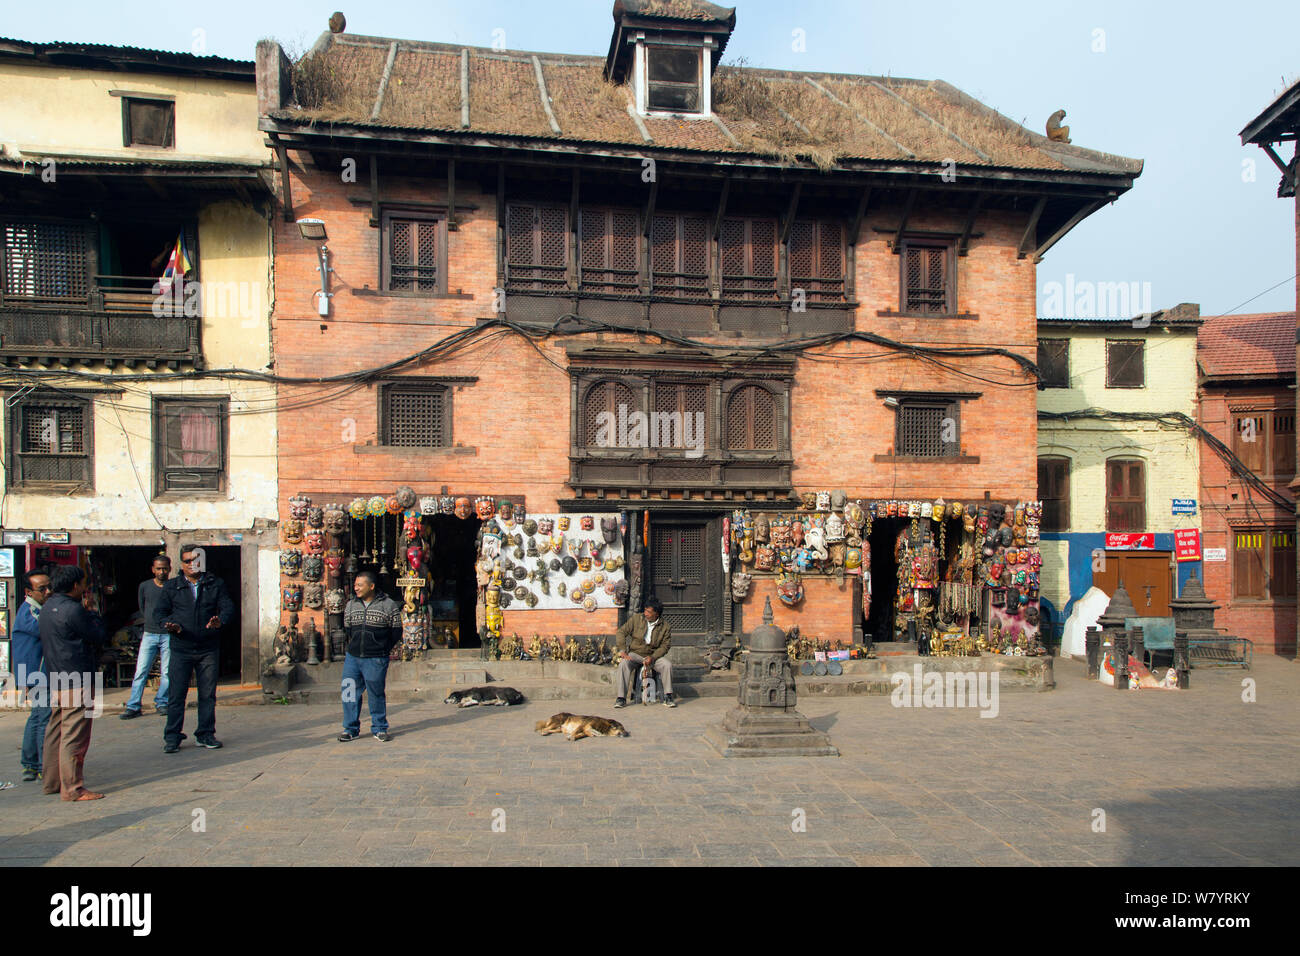 Historic buildings and shops selling masks, at the Monkey Temple or Swayambhunath, Kathmandu, Nepal. November 2014. Stock Photo